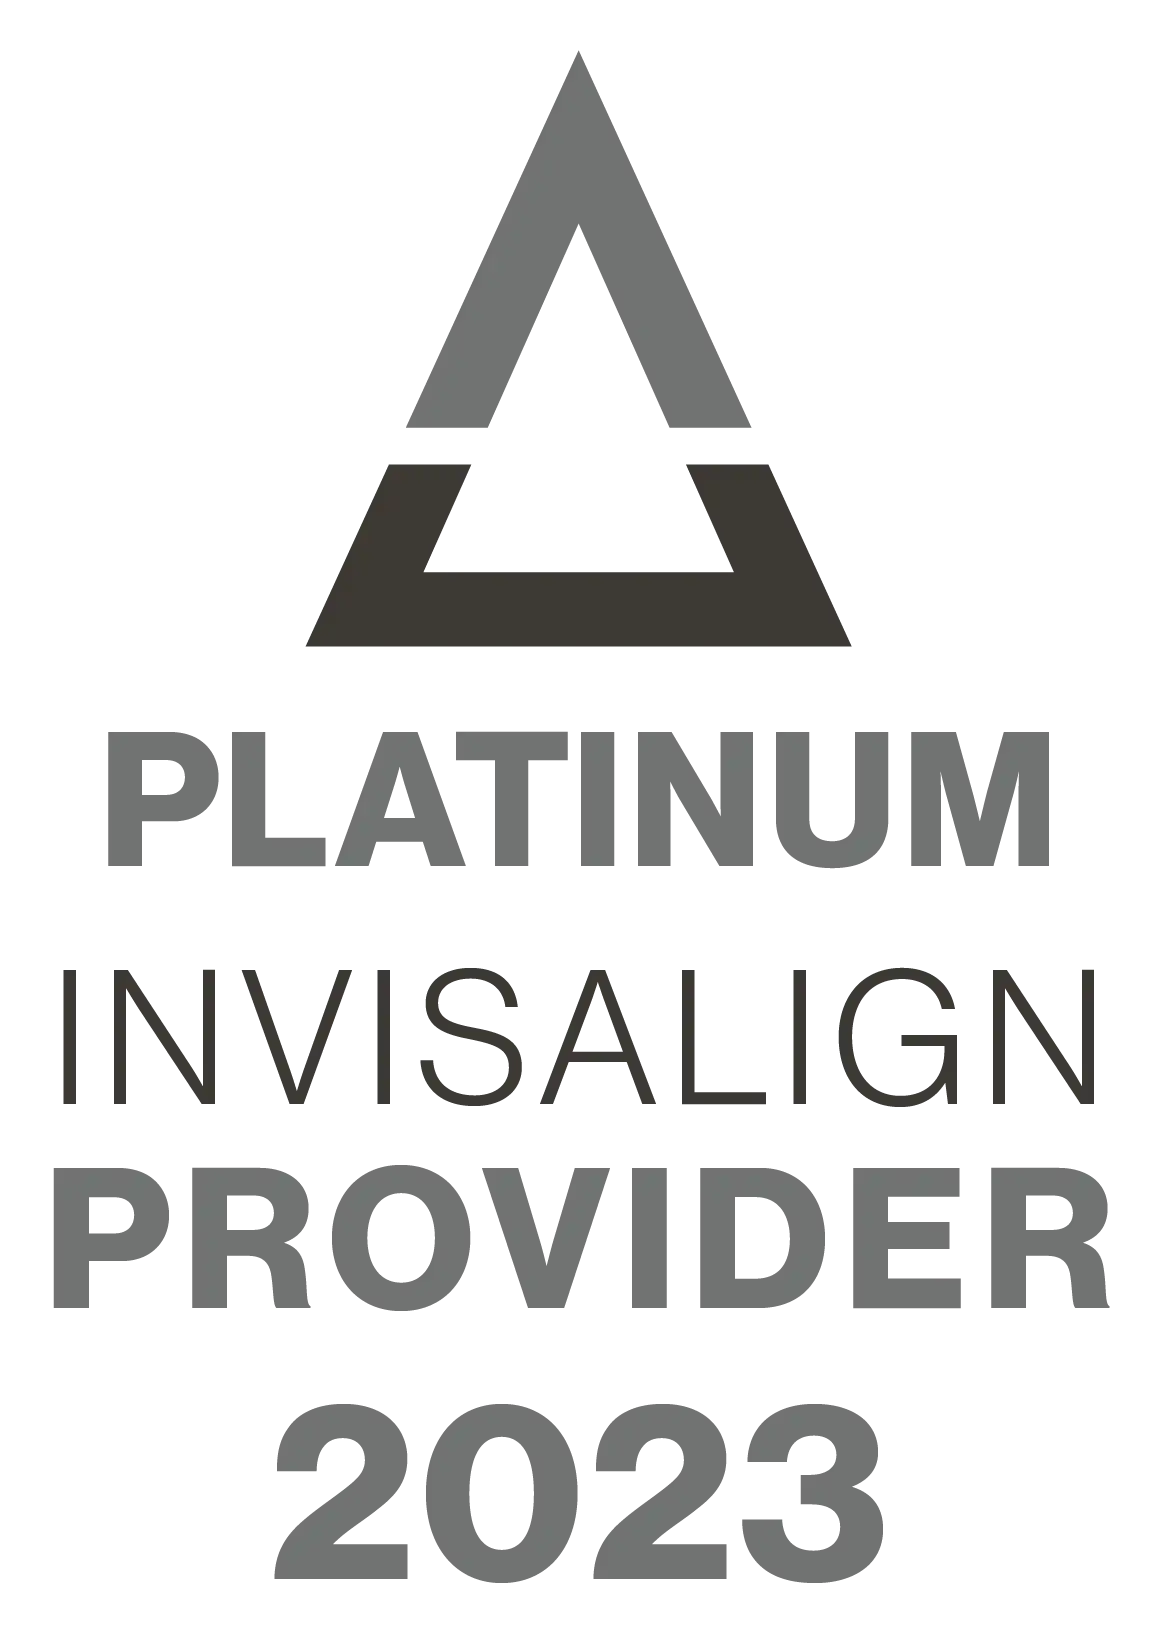 Platinum Invisalign Provider 2023